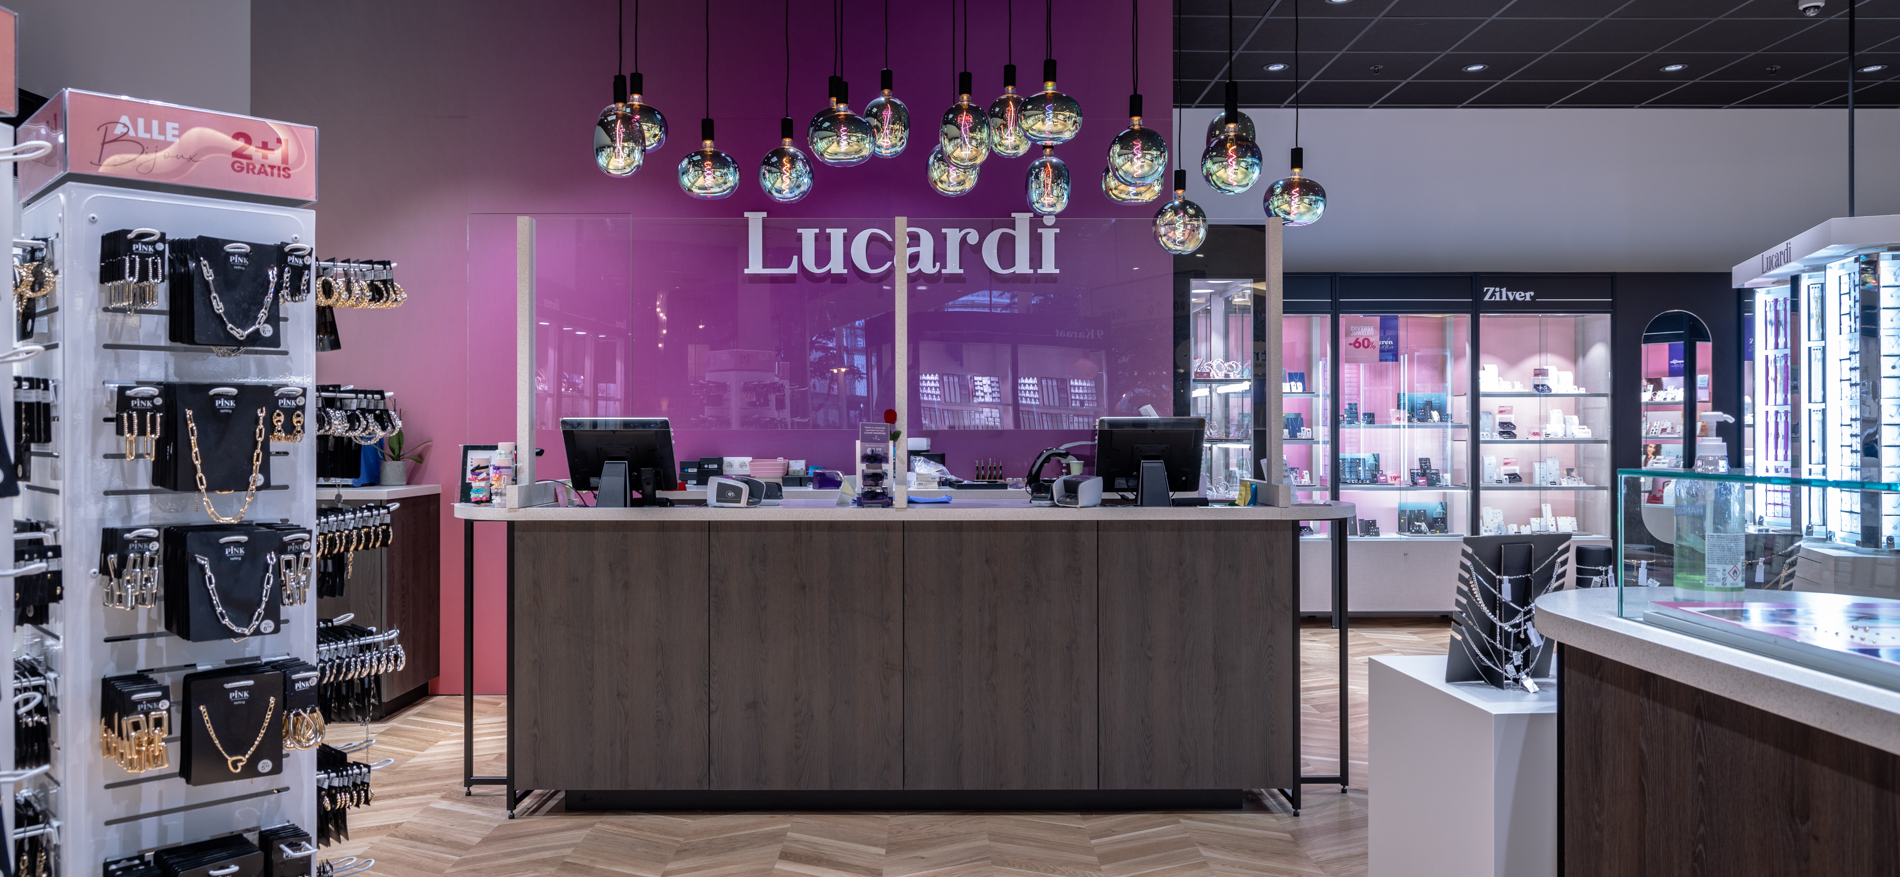 Lucardi Jewelers | Sint-Niklaas (BE) - Jeweler